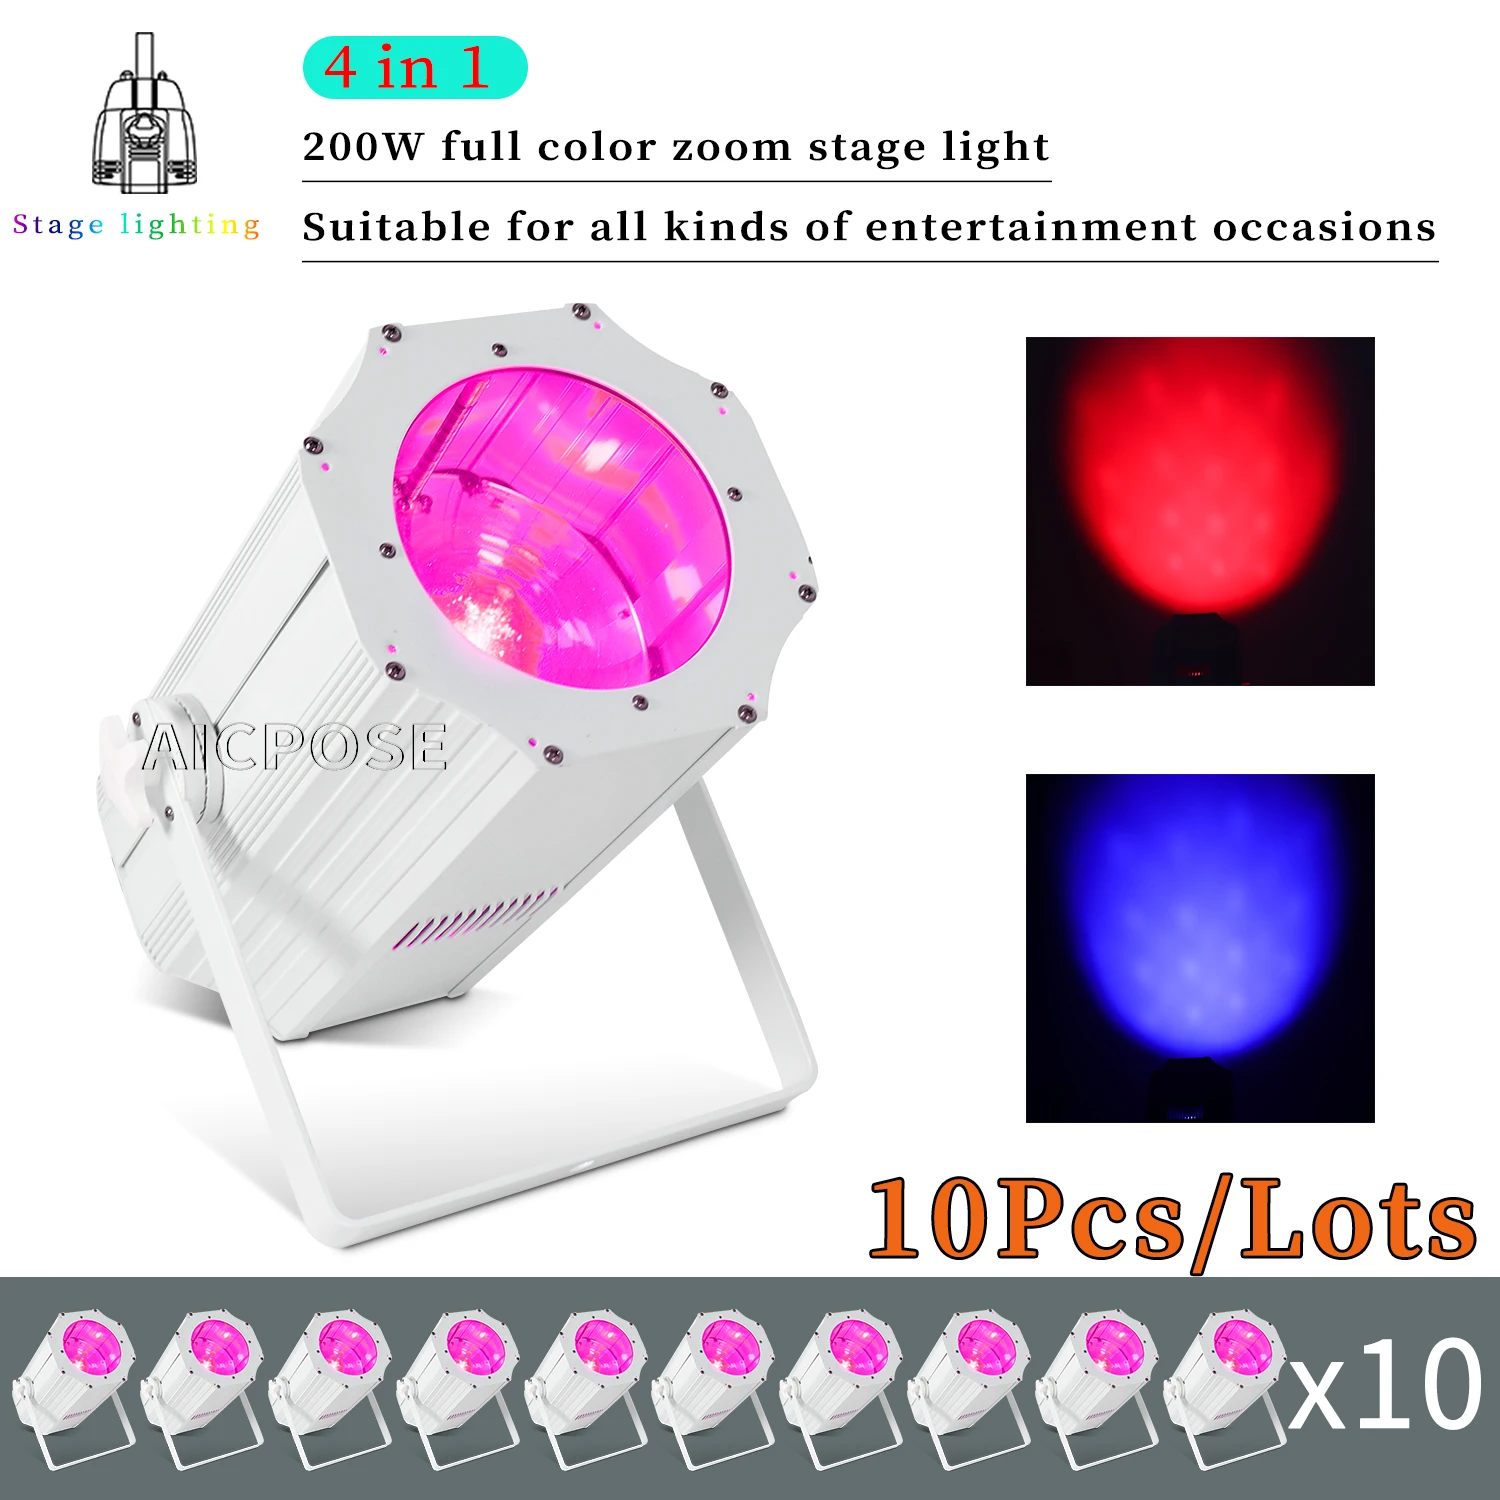 

10Pcs/Lots 200W White Stage Light COB Zoom Audience Light RGBW 4 in 1 LED Par Light Stage Wedding Disco Remote Spotlight